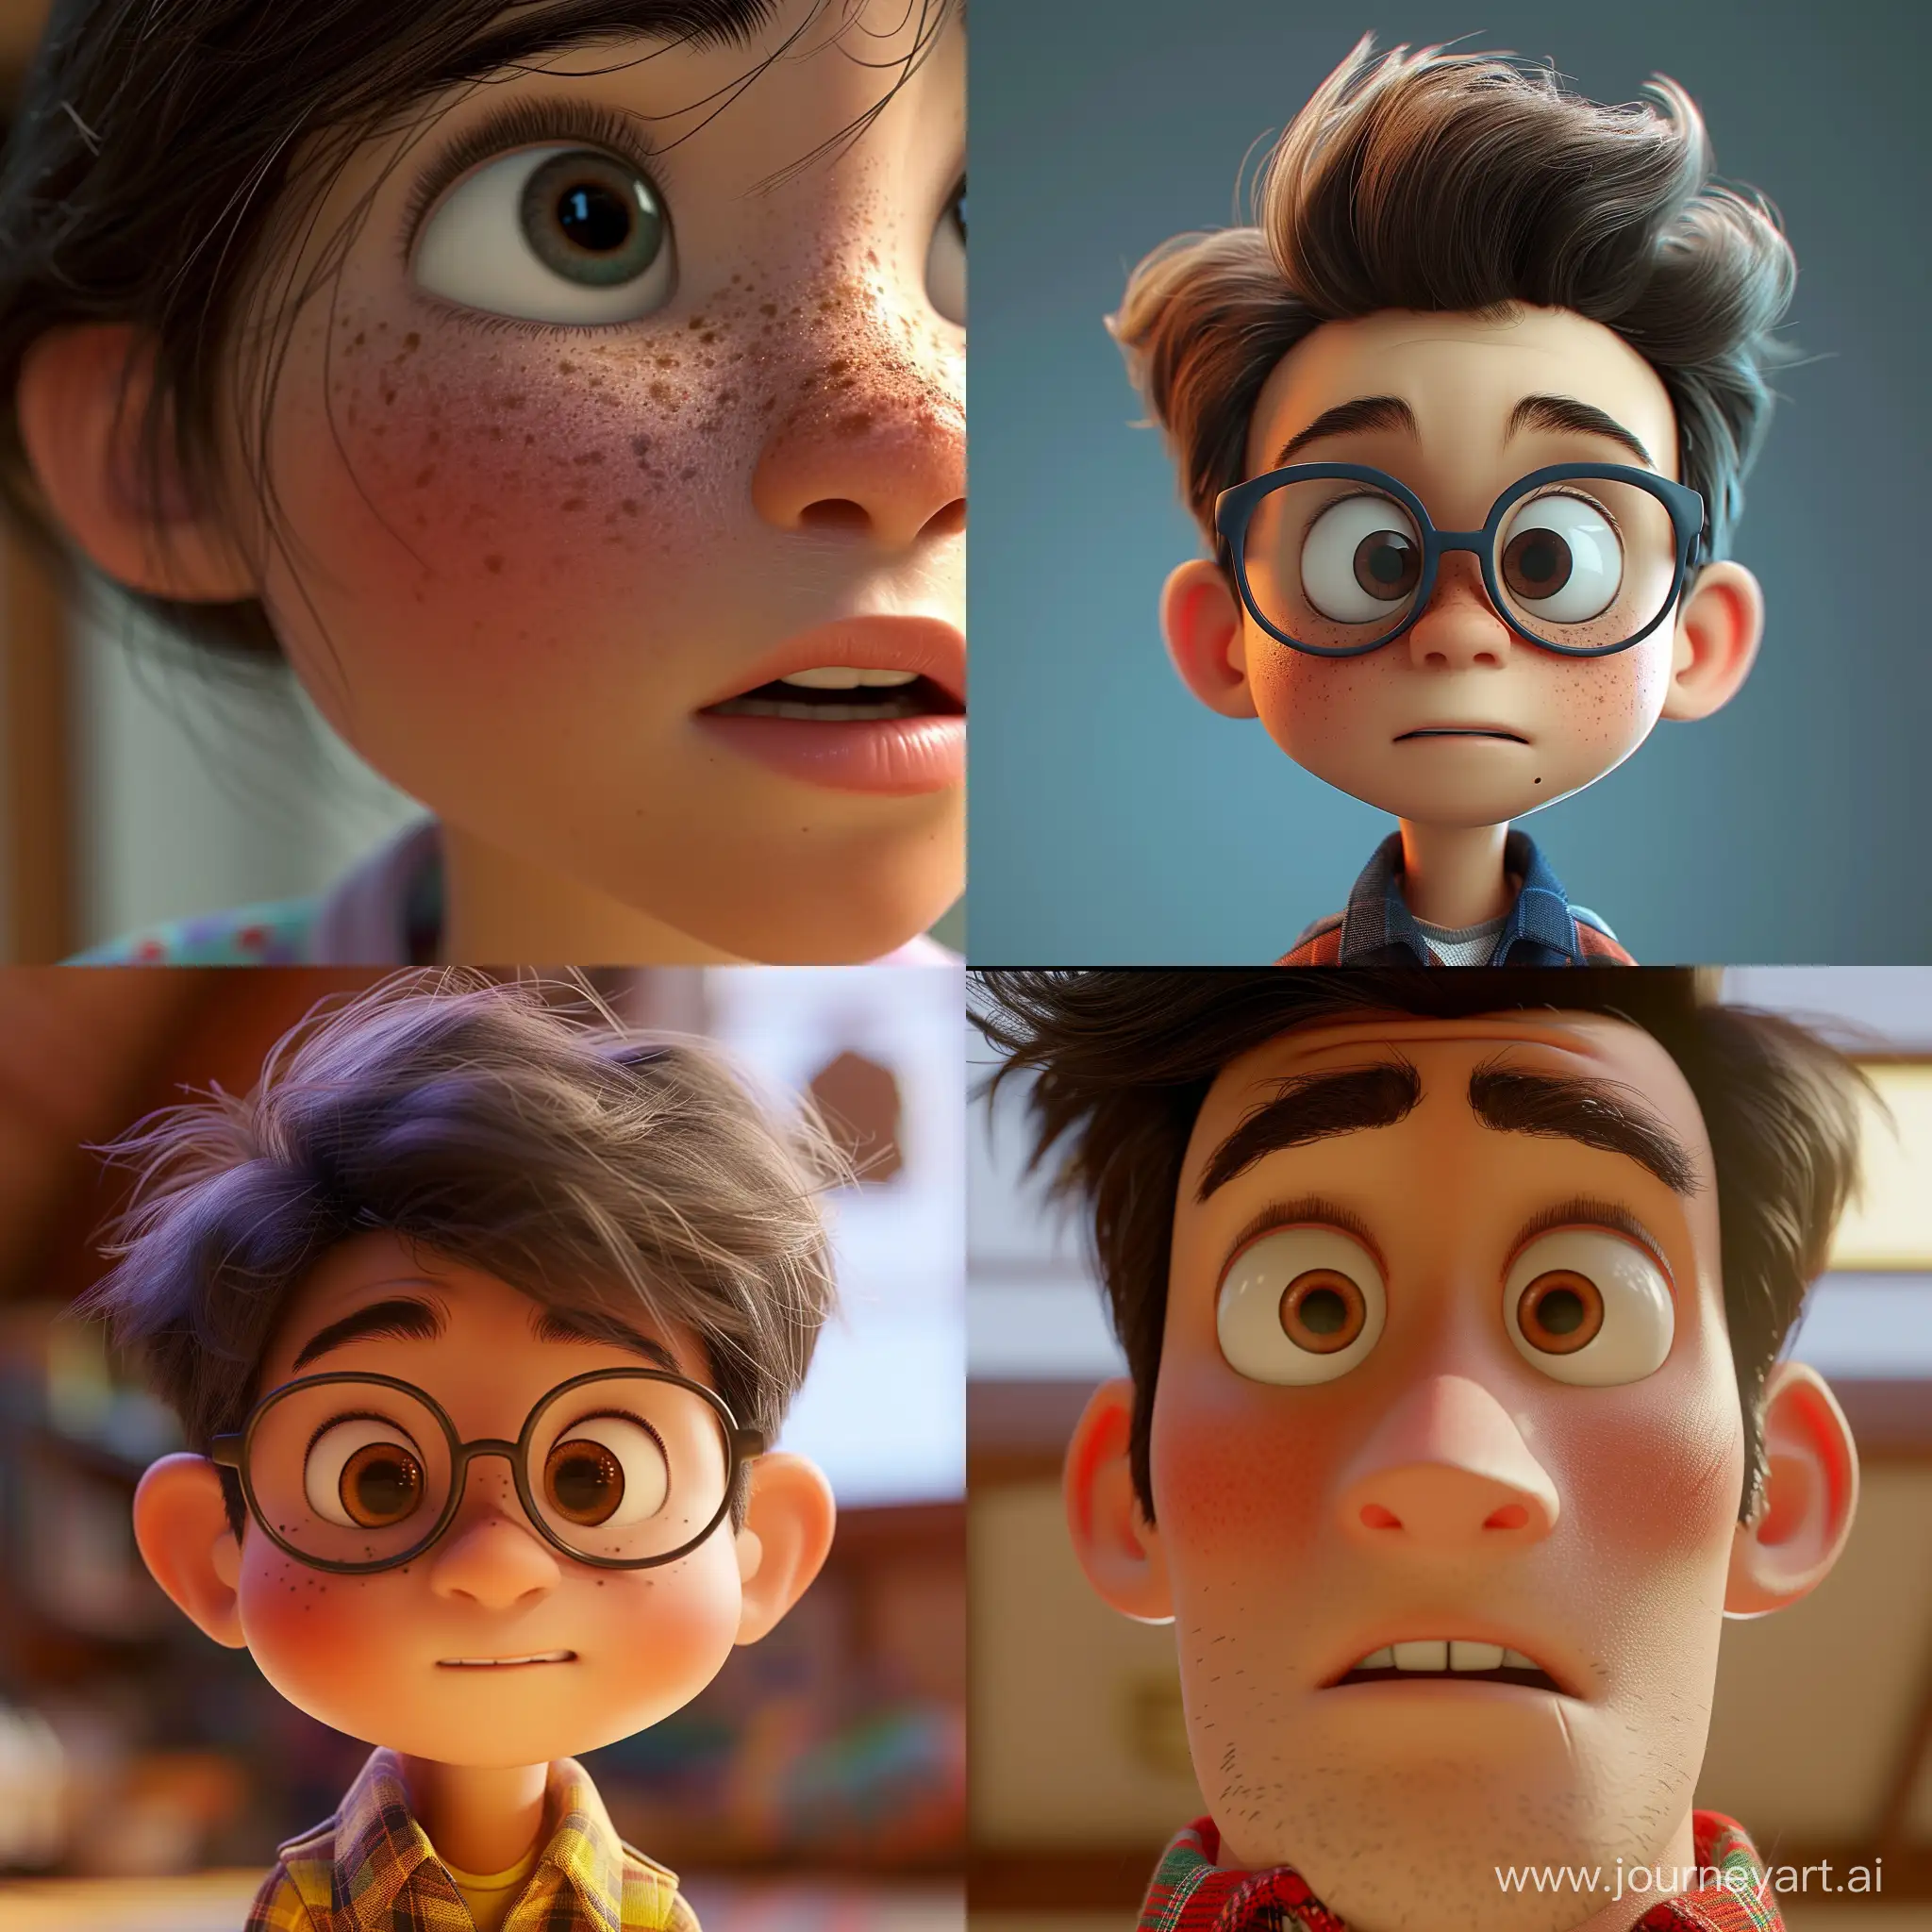 Colorful-Pixar-Cartoon-Characters-in-Closeup-View